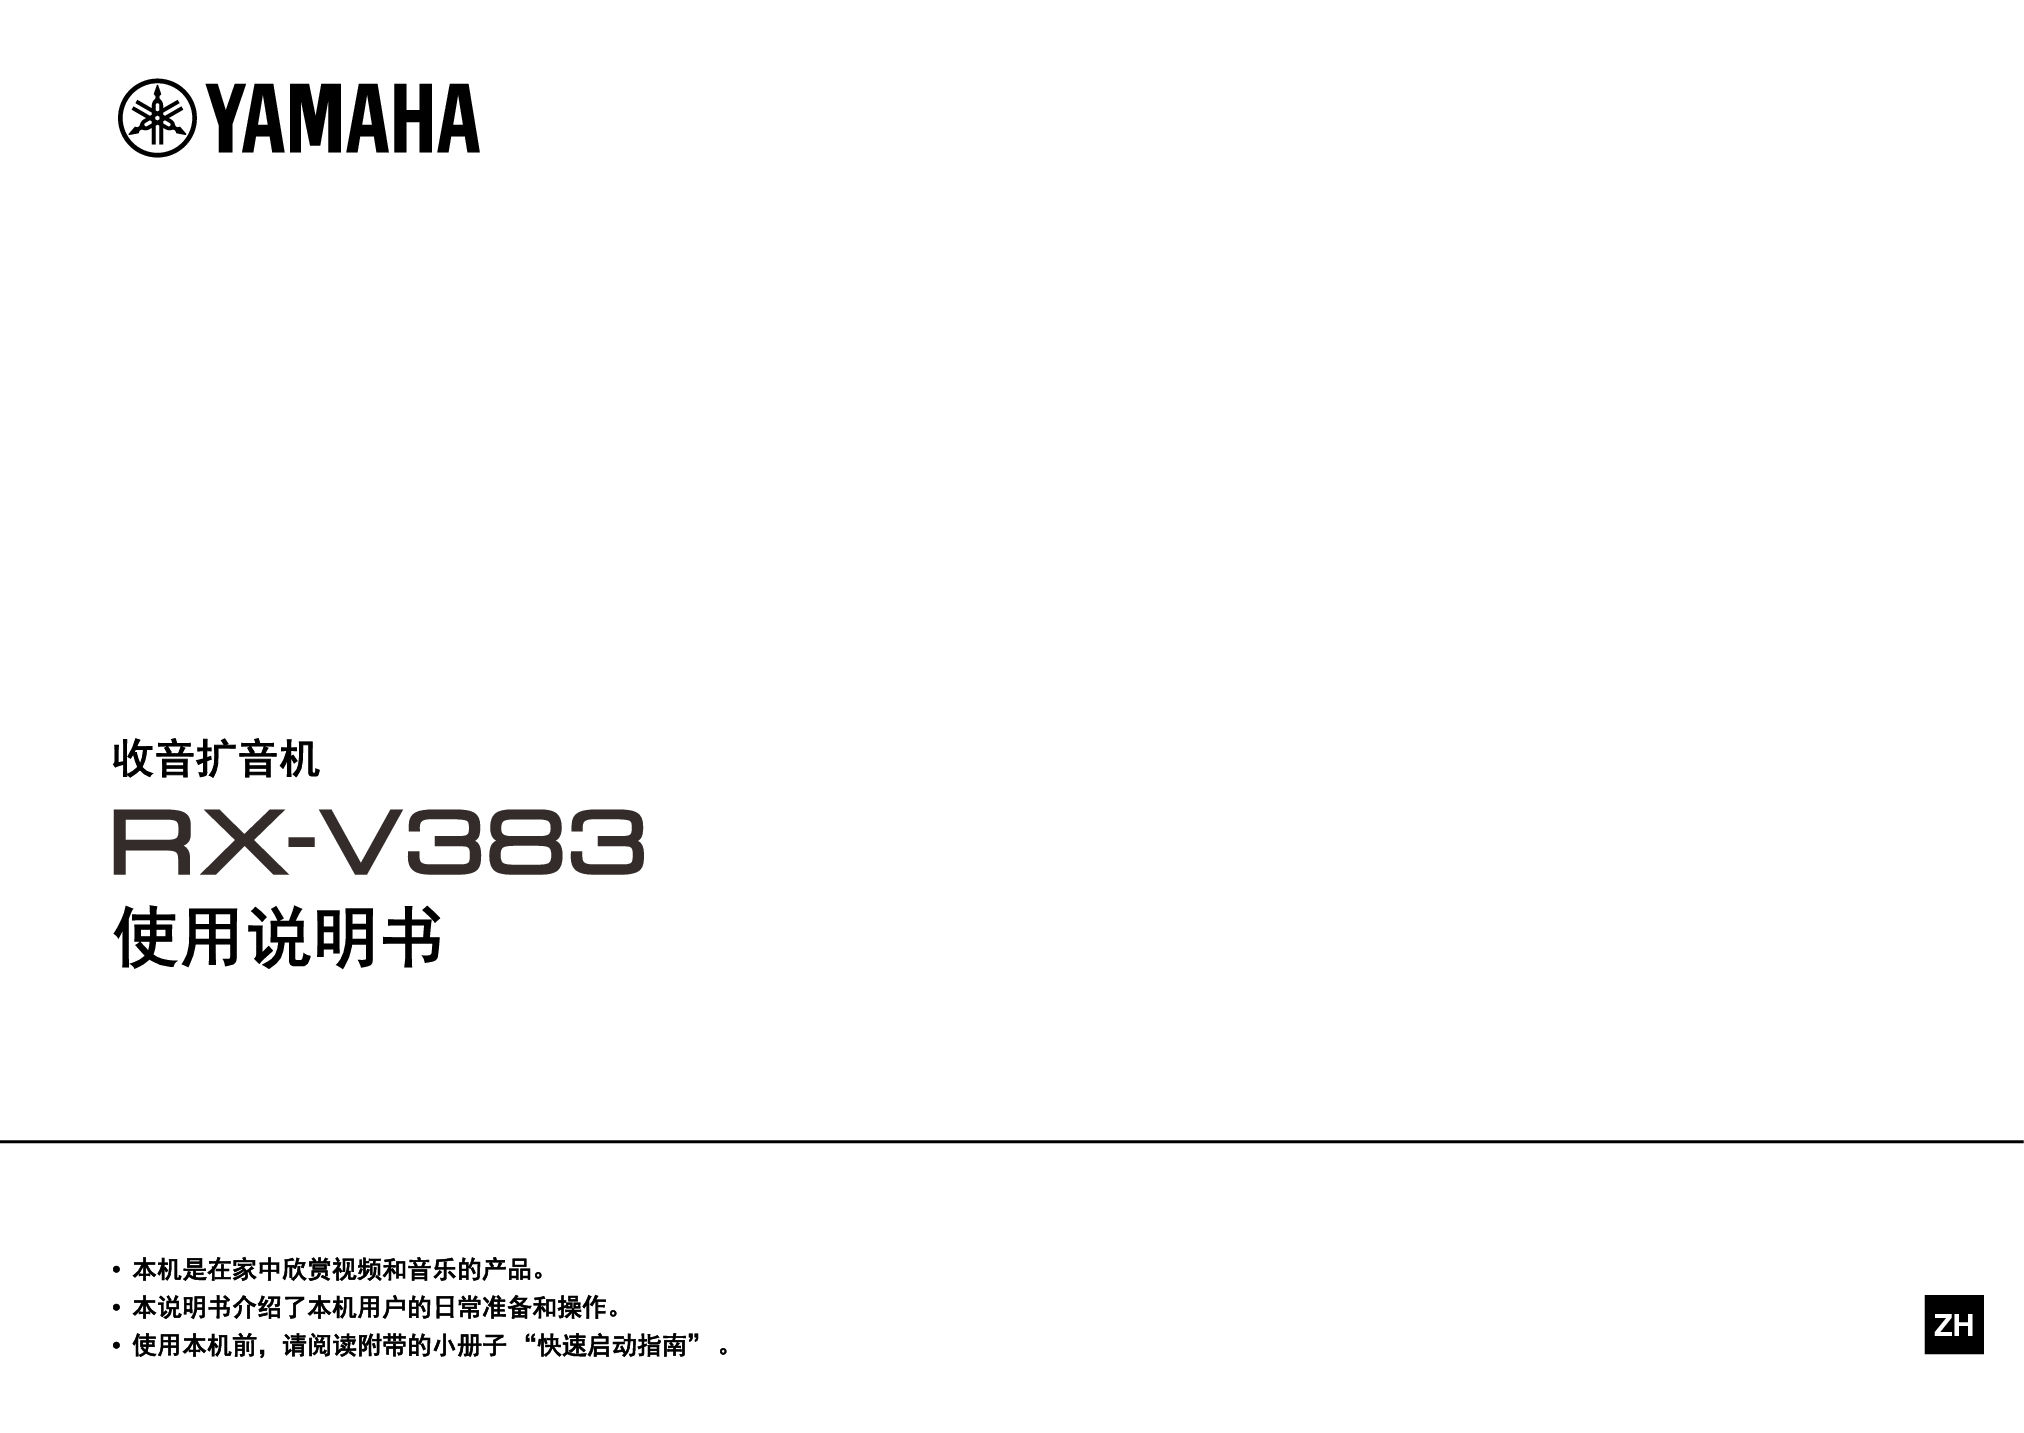 雅马哈 Yamaha RX-V383 使用说明书 封面